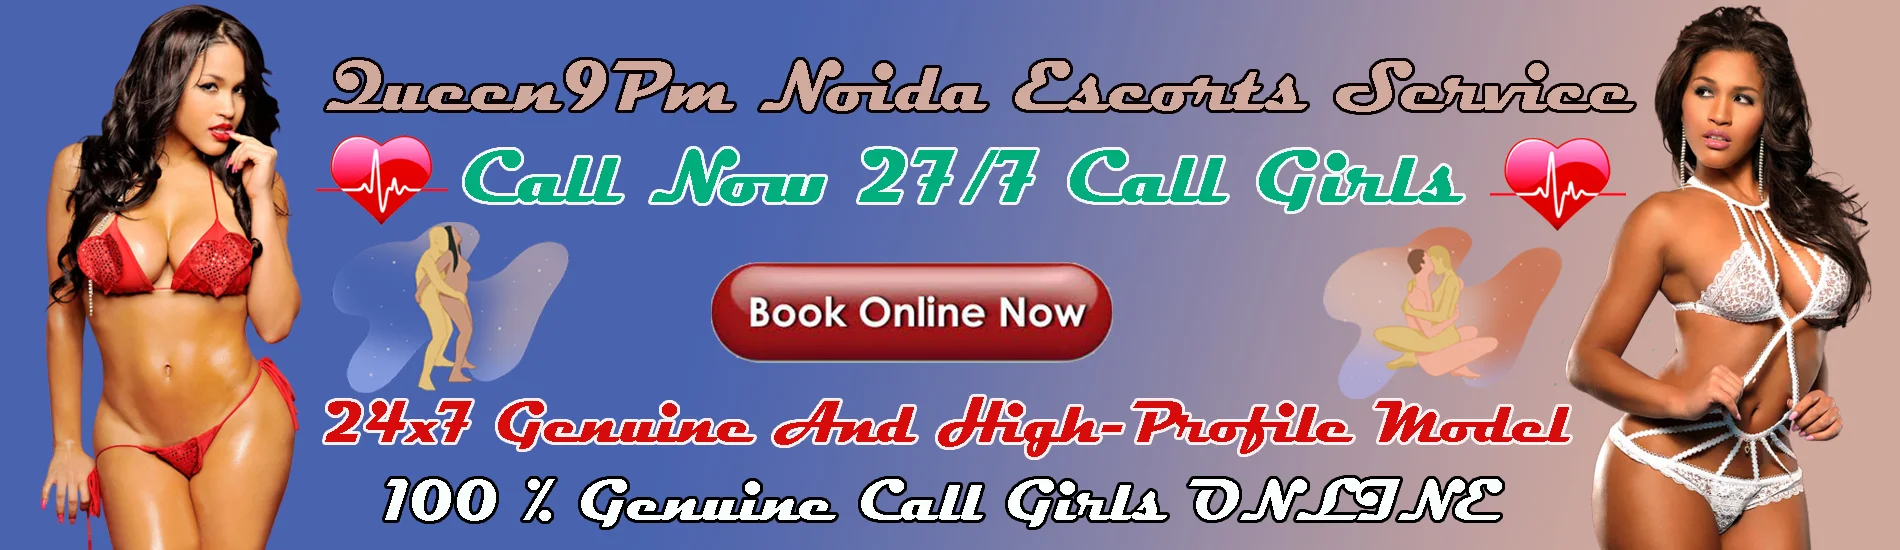 Crowne Plaza Hotel, New Delhi Girls WhatsApp Number